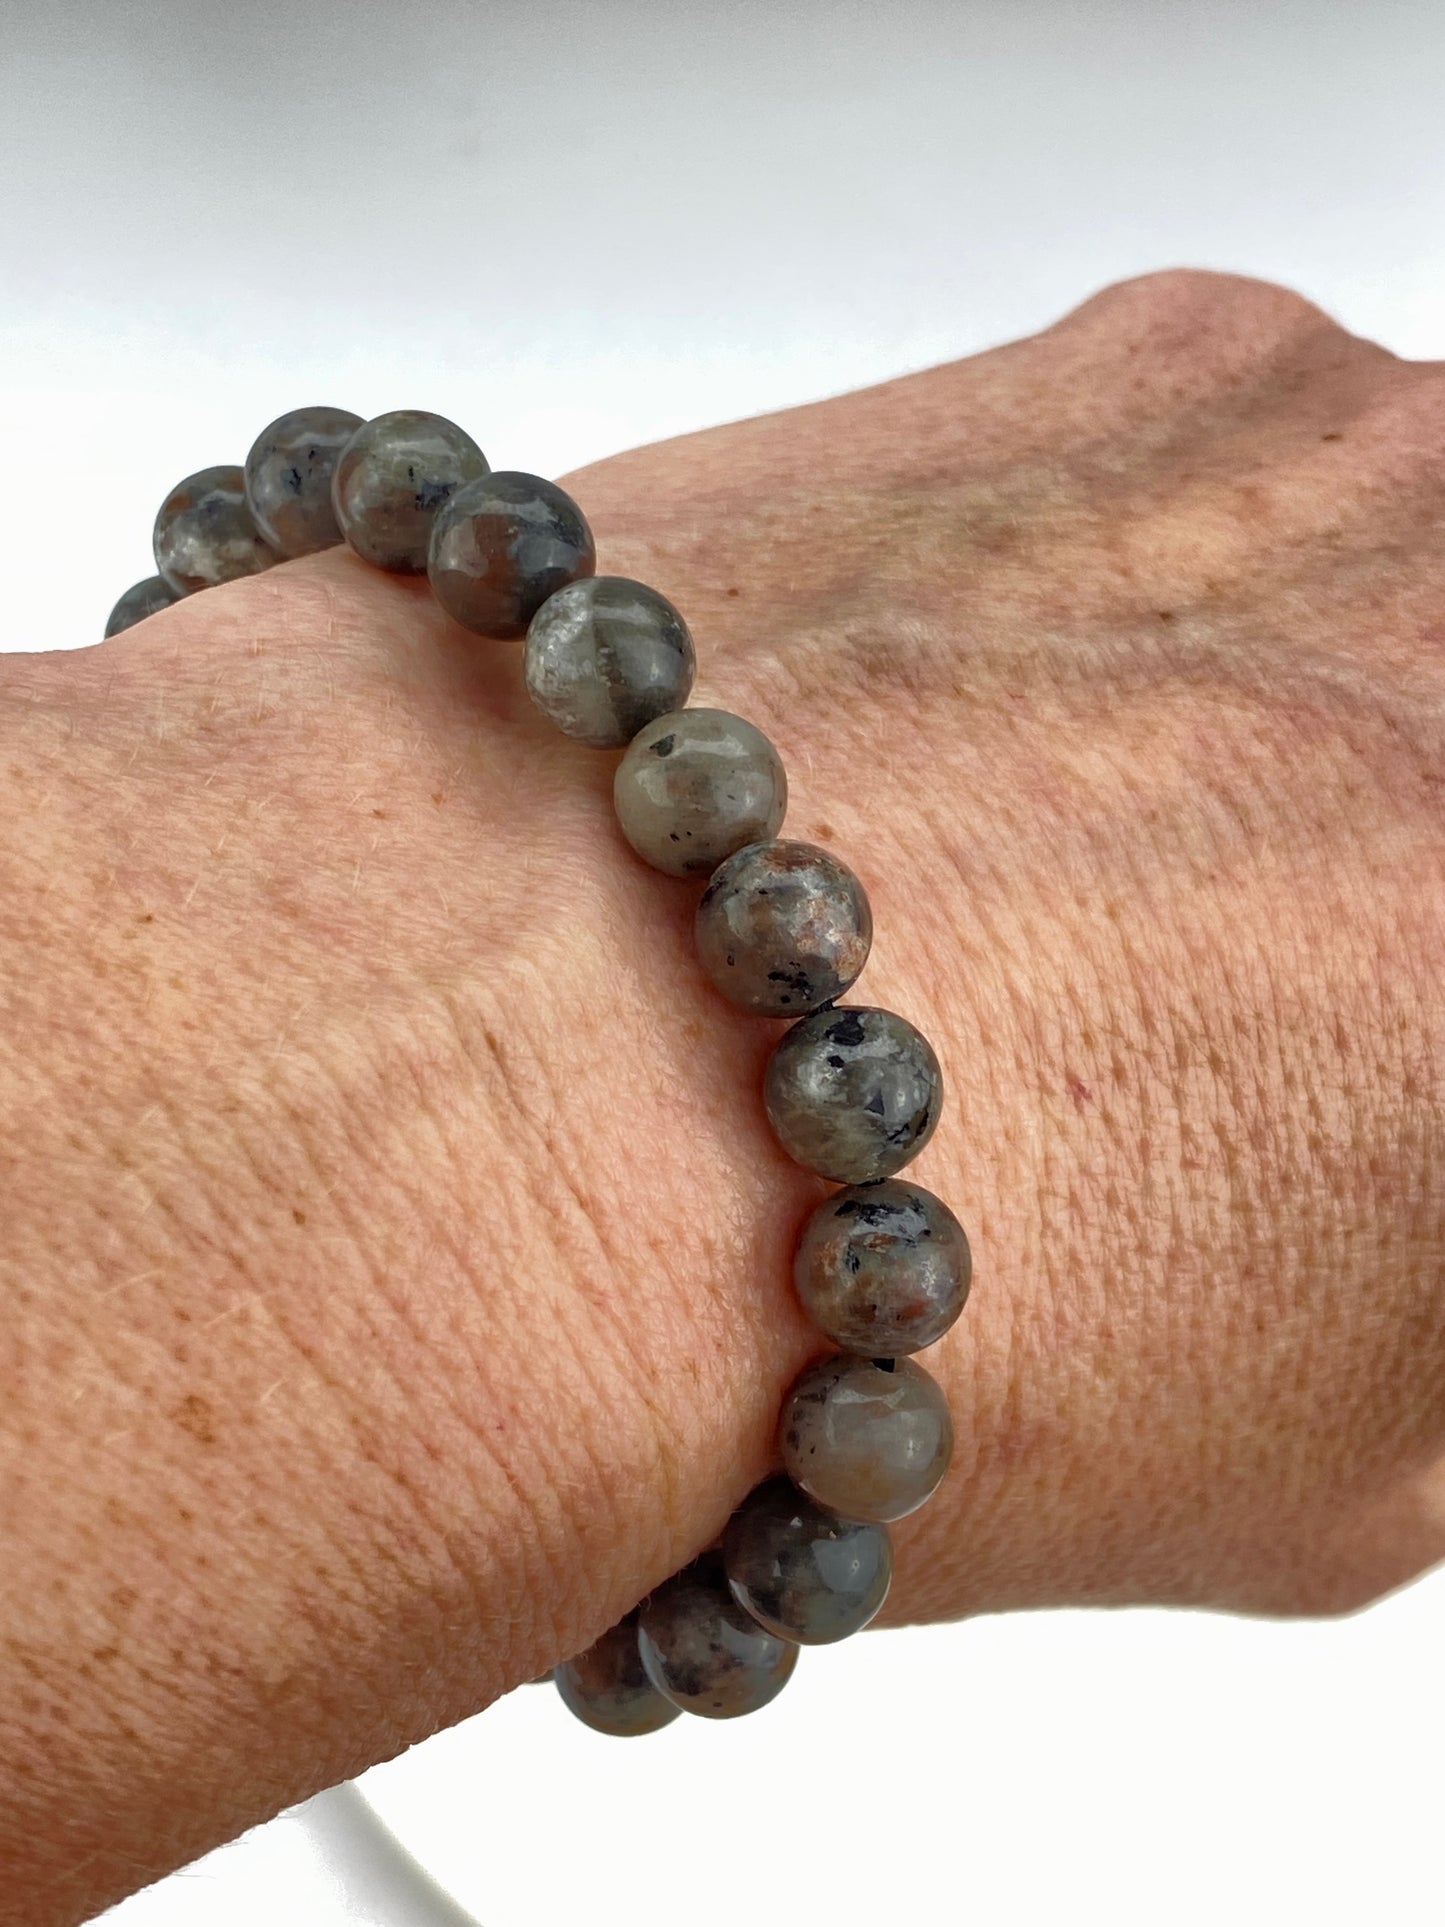 Yooperlite crystal 8mm bead bracelet, Ease menopause, inflammation and headaches.